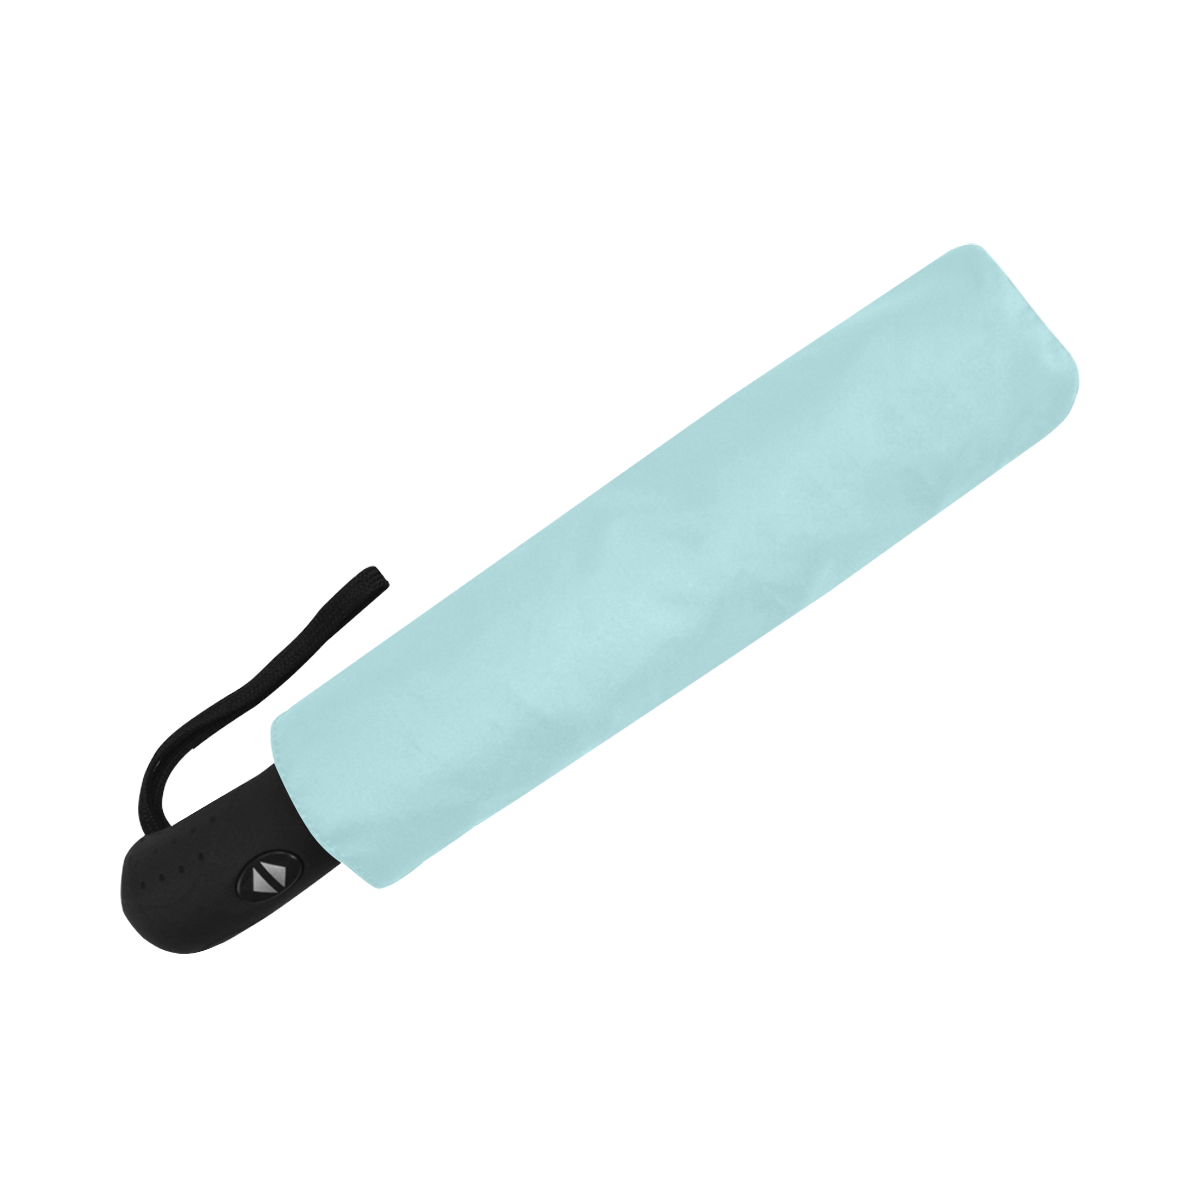 color powder blue Anti-UV Auto-Foldable Umbrella (U09)